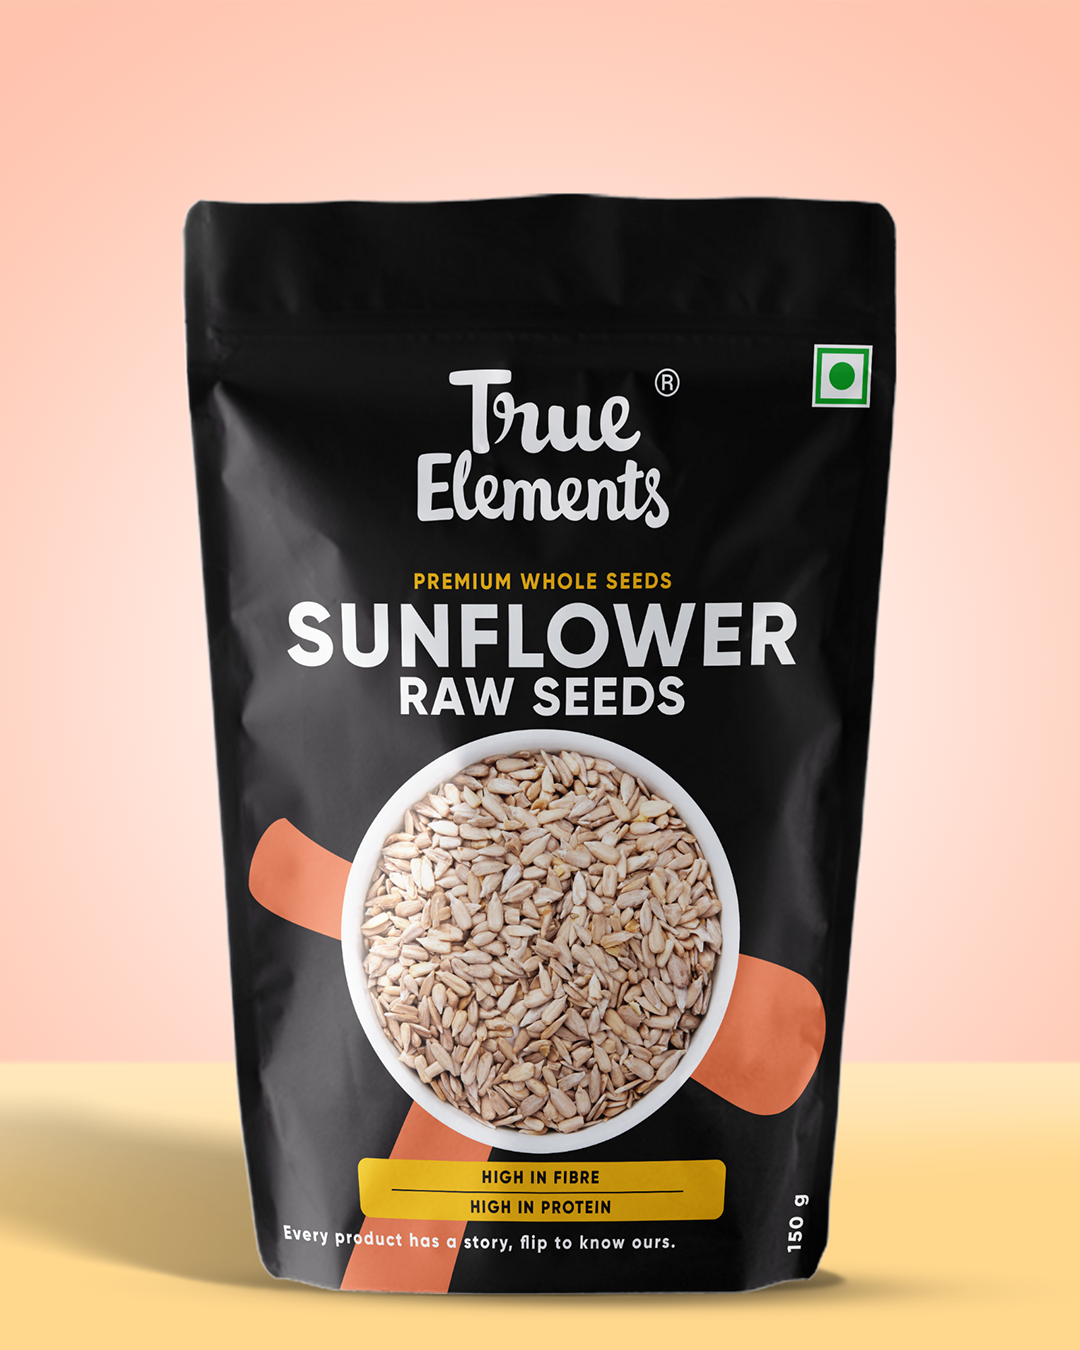 True elements raw sunflower seeds 150g Pouch (Premium Whole Seeds)